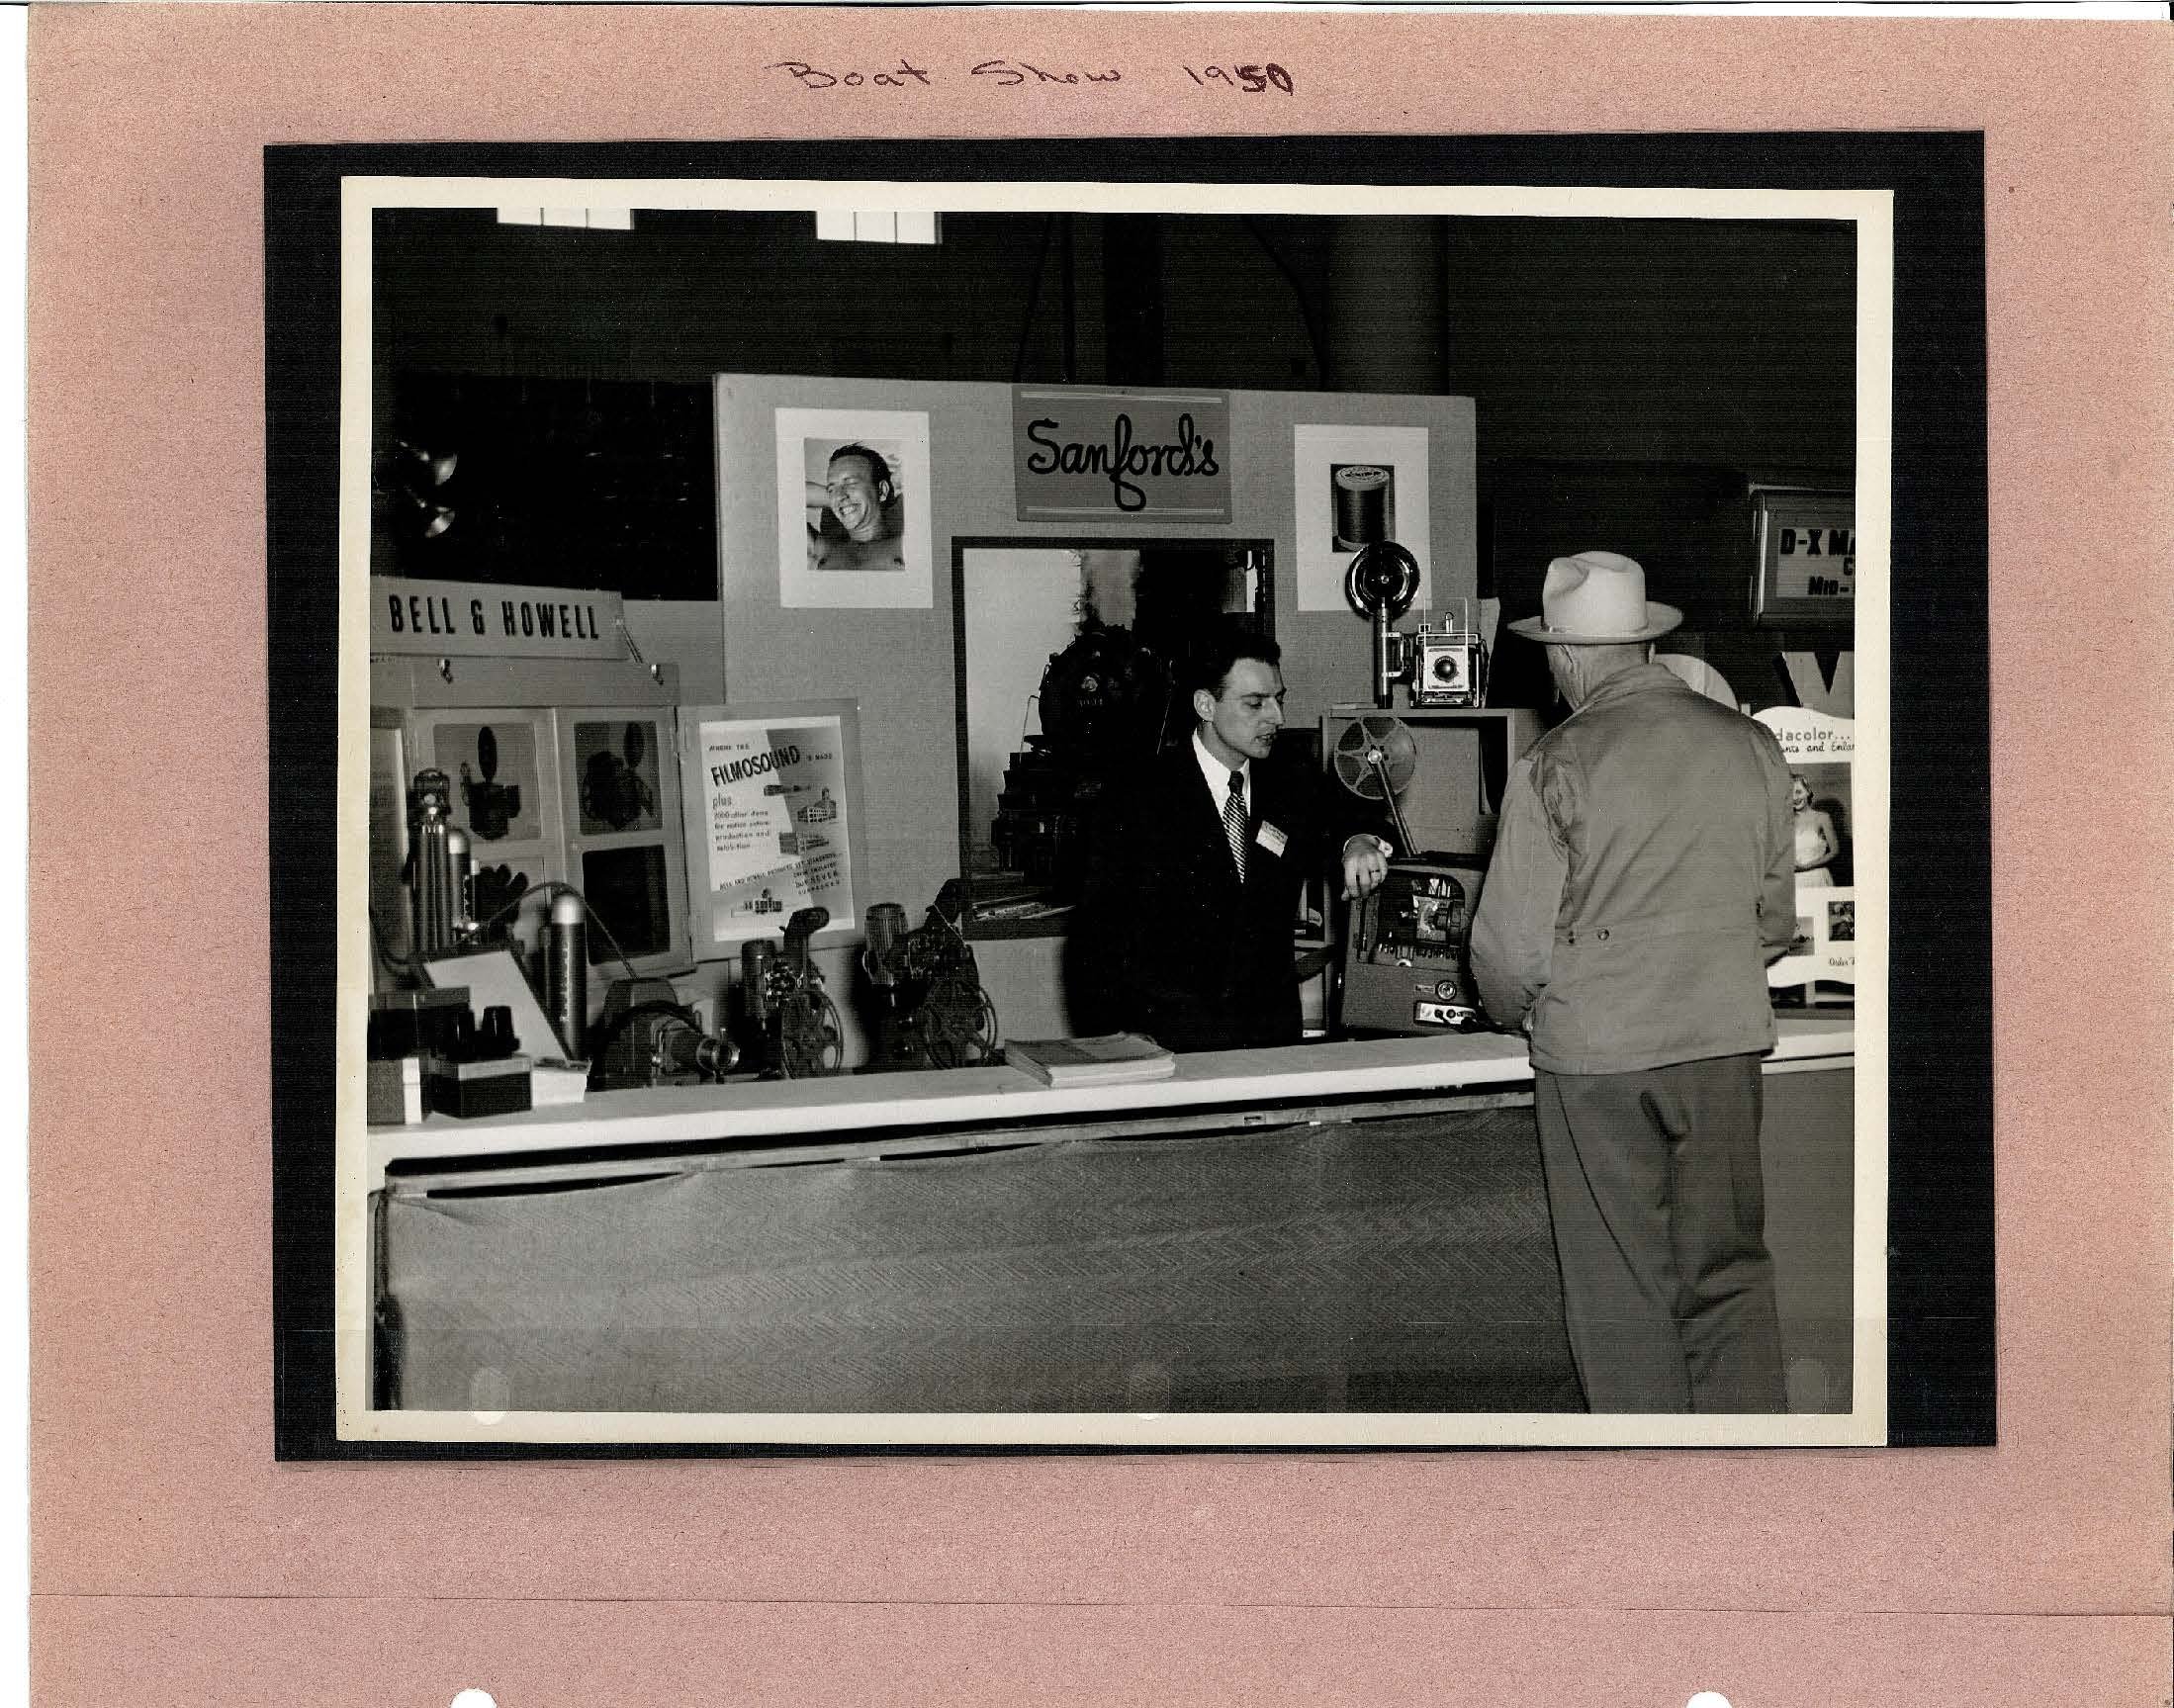 Photo taken at Boat show 1950 of Sanford's